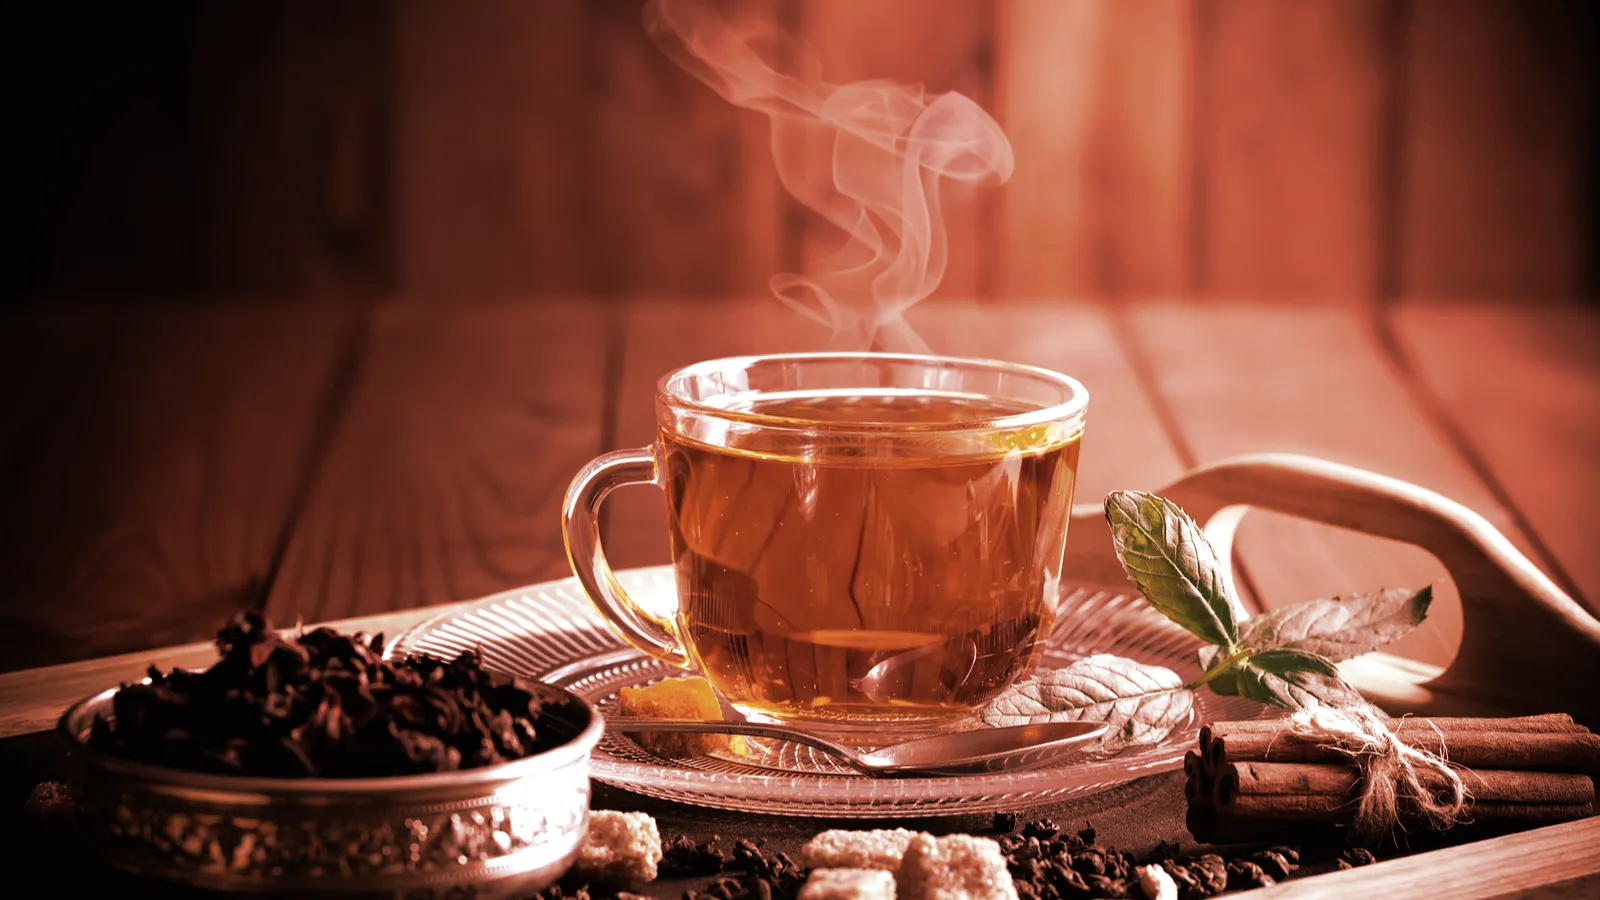 It's hidden in the tea leaves. Image: Shutterstock